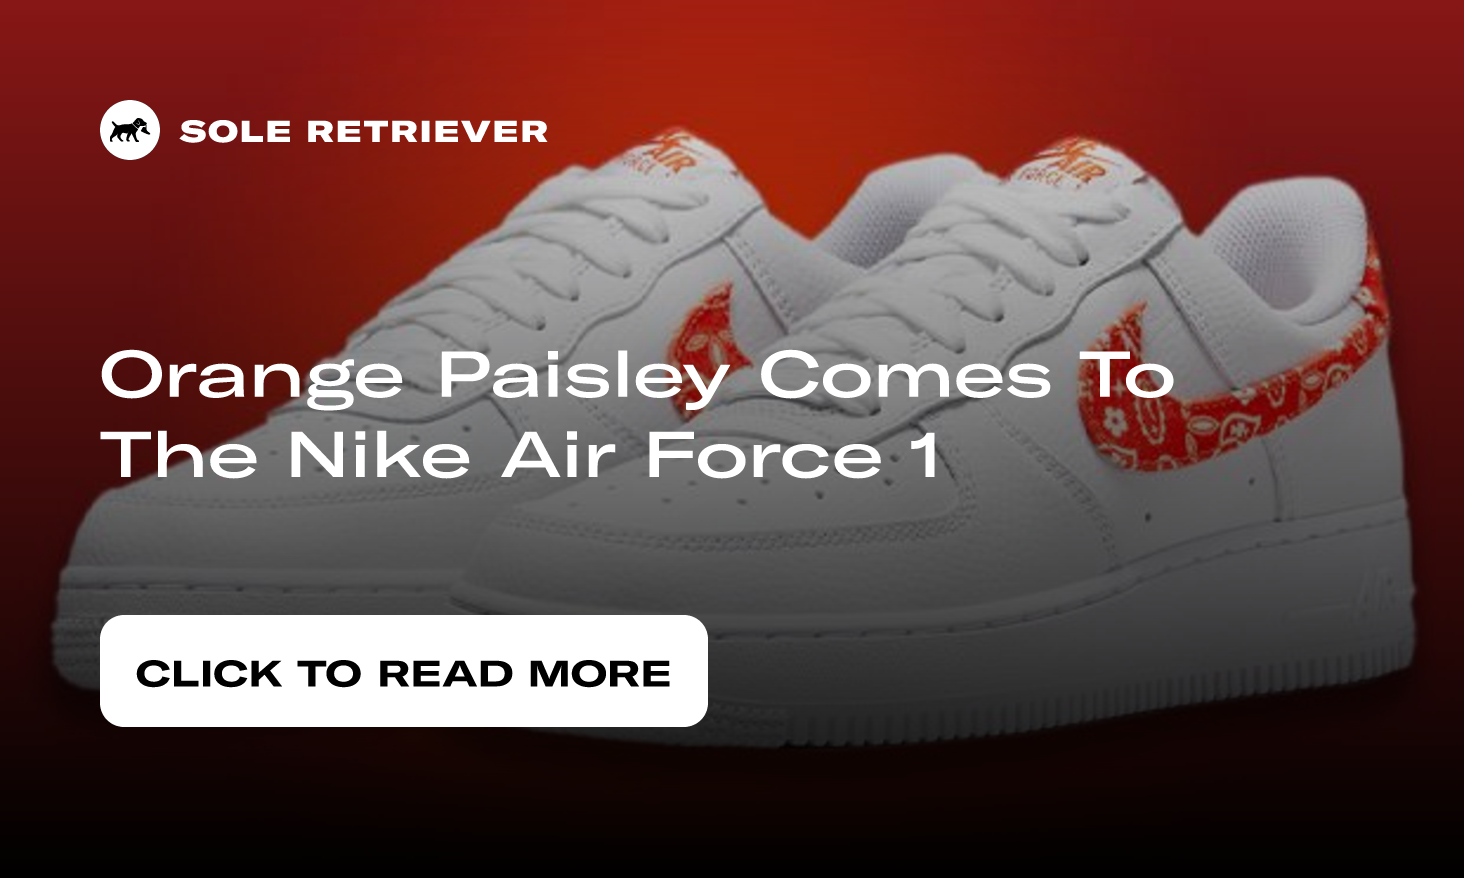 BUY Nike Air Force 1 Low Orange Paisley